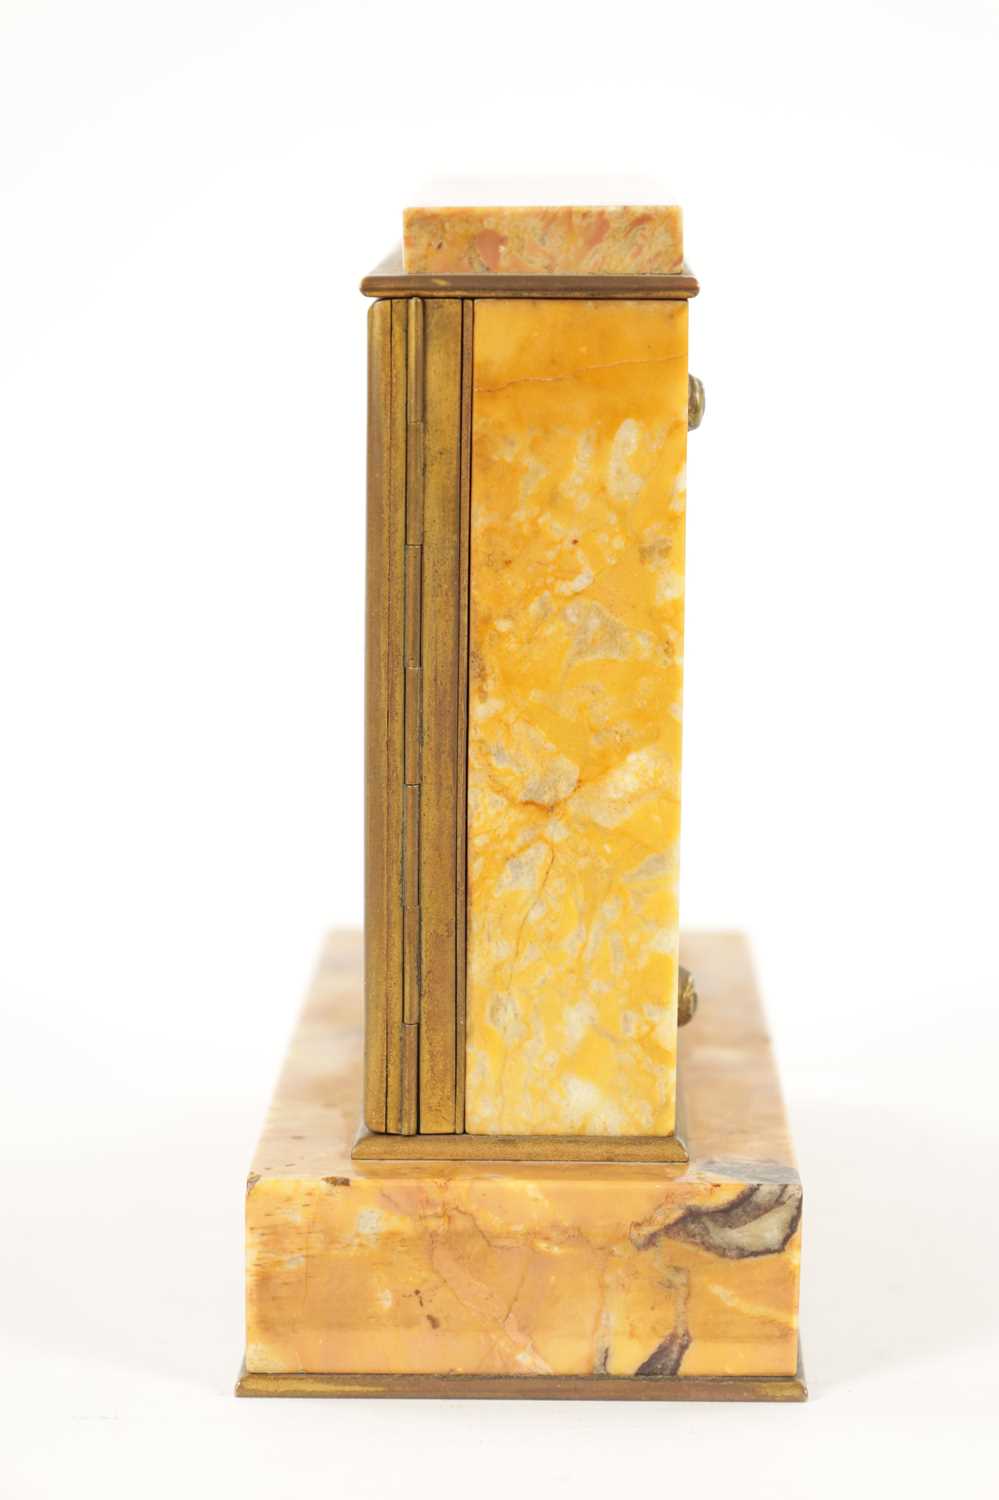 HENRI DITISHEIM. A GOOD QUALITY SWISS POLYCHROME ENAMELLED MANTEL CLOCK - Image 11 of 12